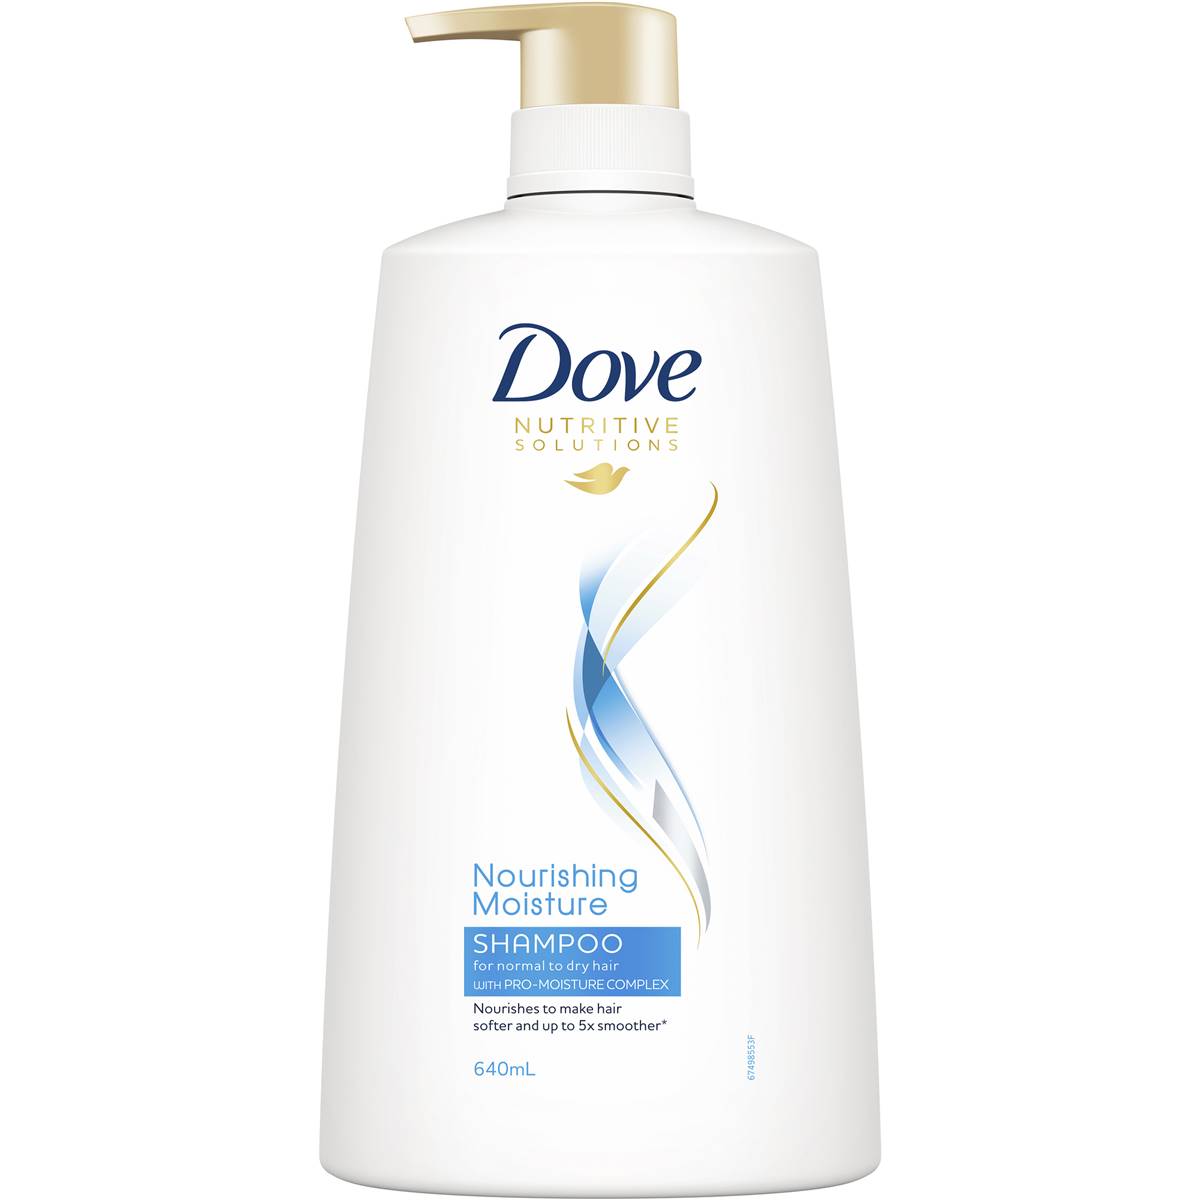 Dove Nutritive Solutions Shampoo Daily Moisture